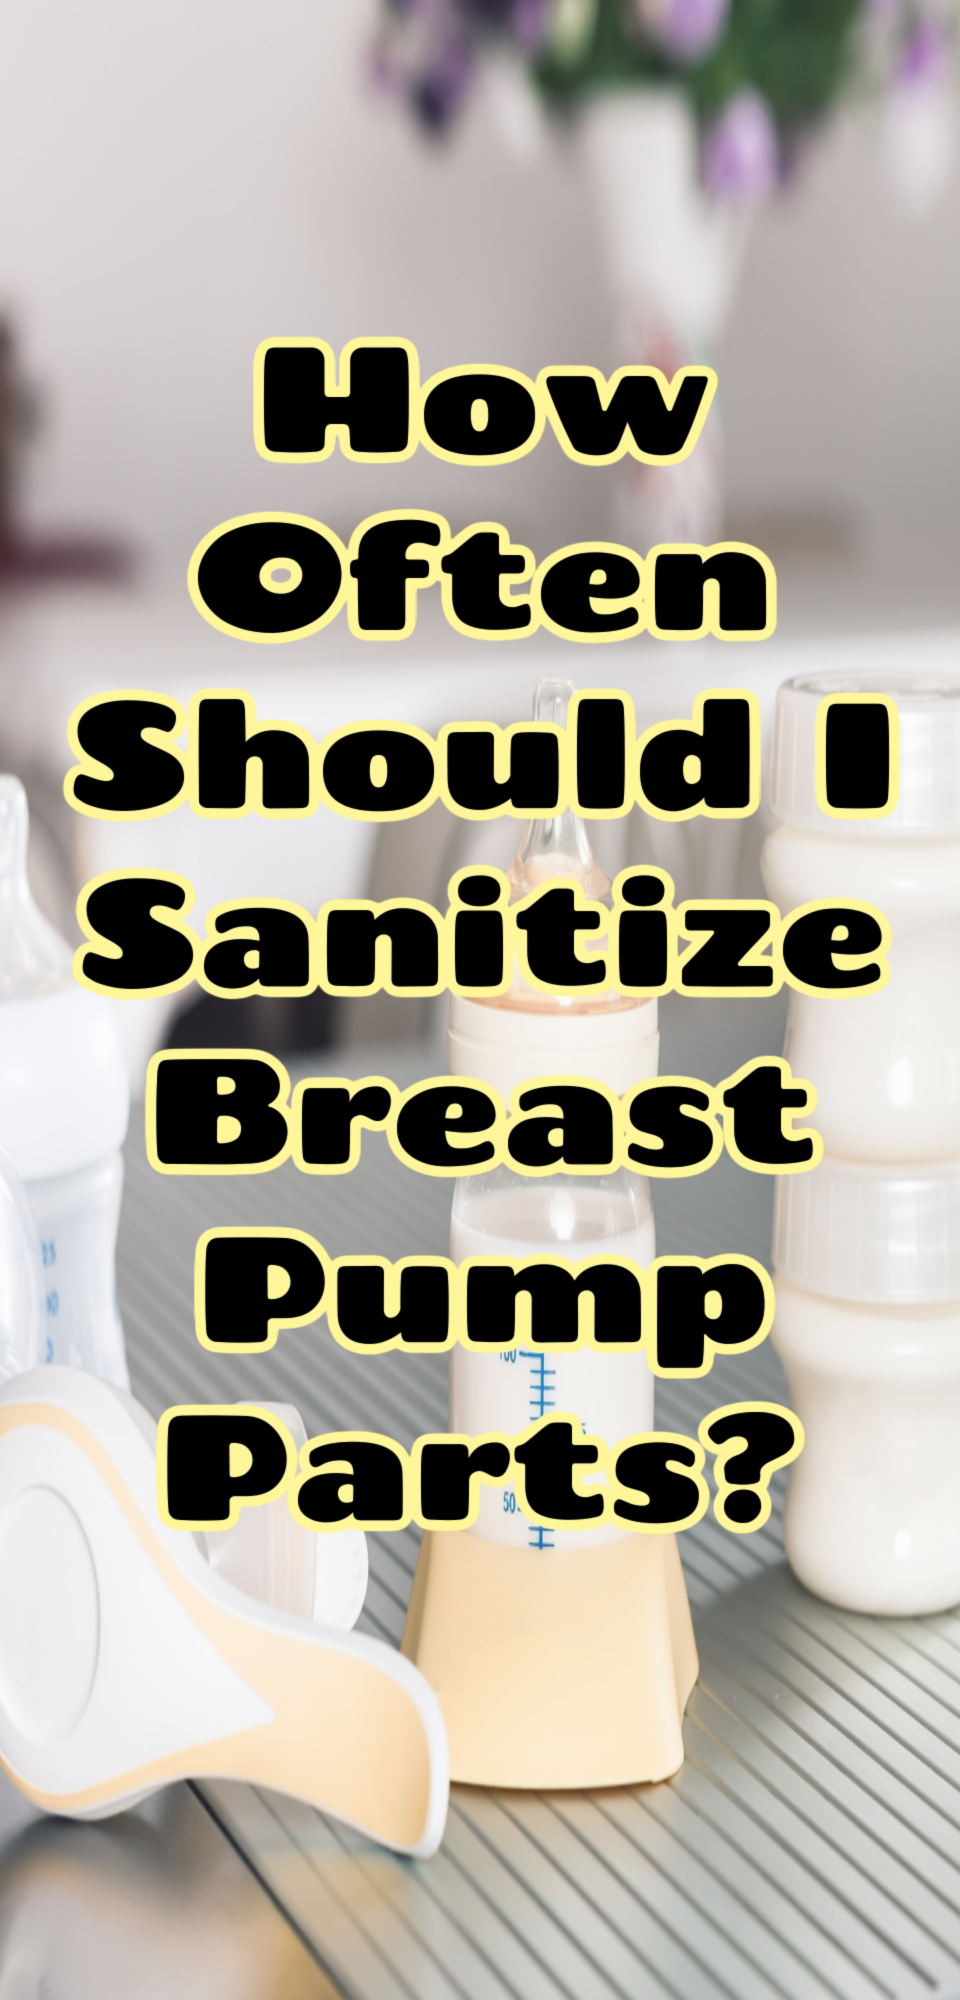 How Often Should I Sanitize Breast Pump Parts?